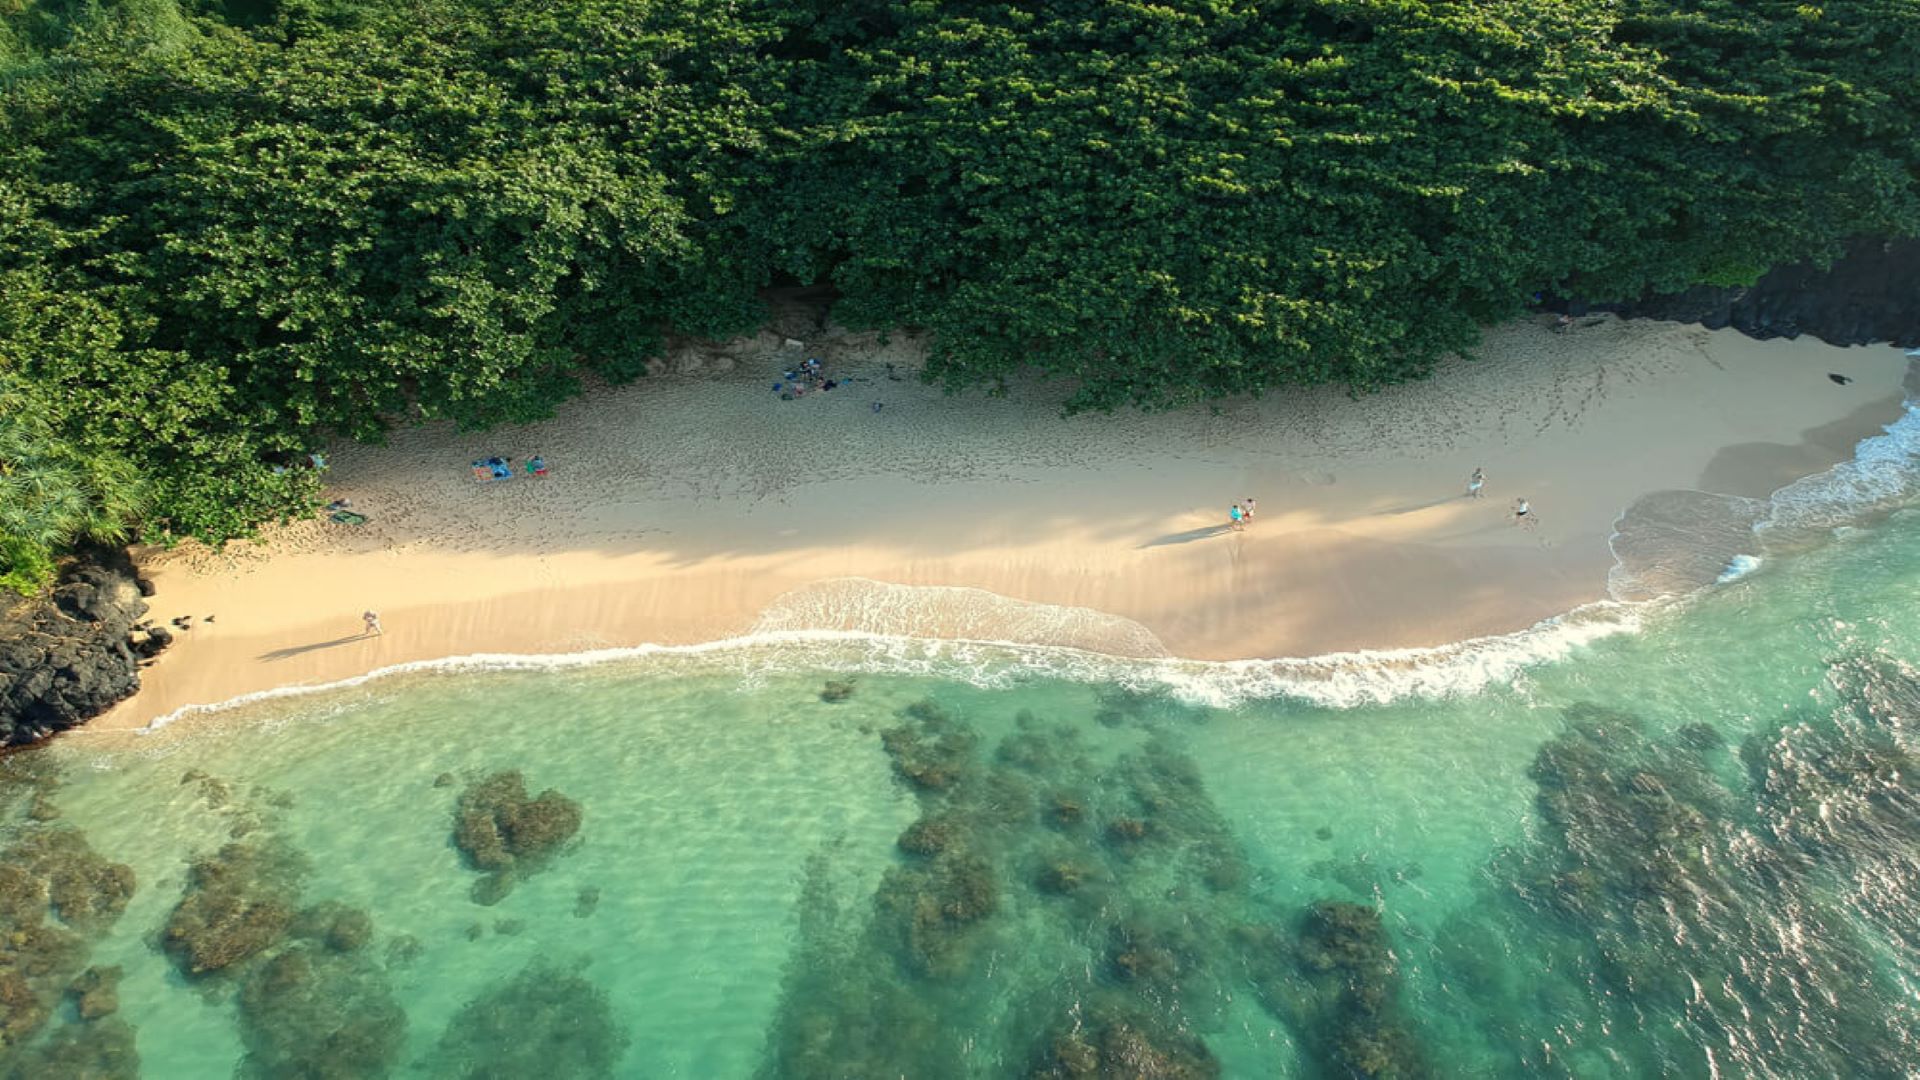 Hideaways Beach is one of Kauai's best hidden gems